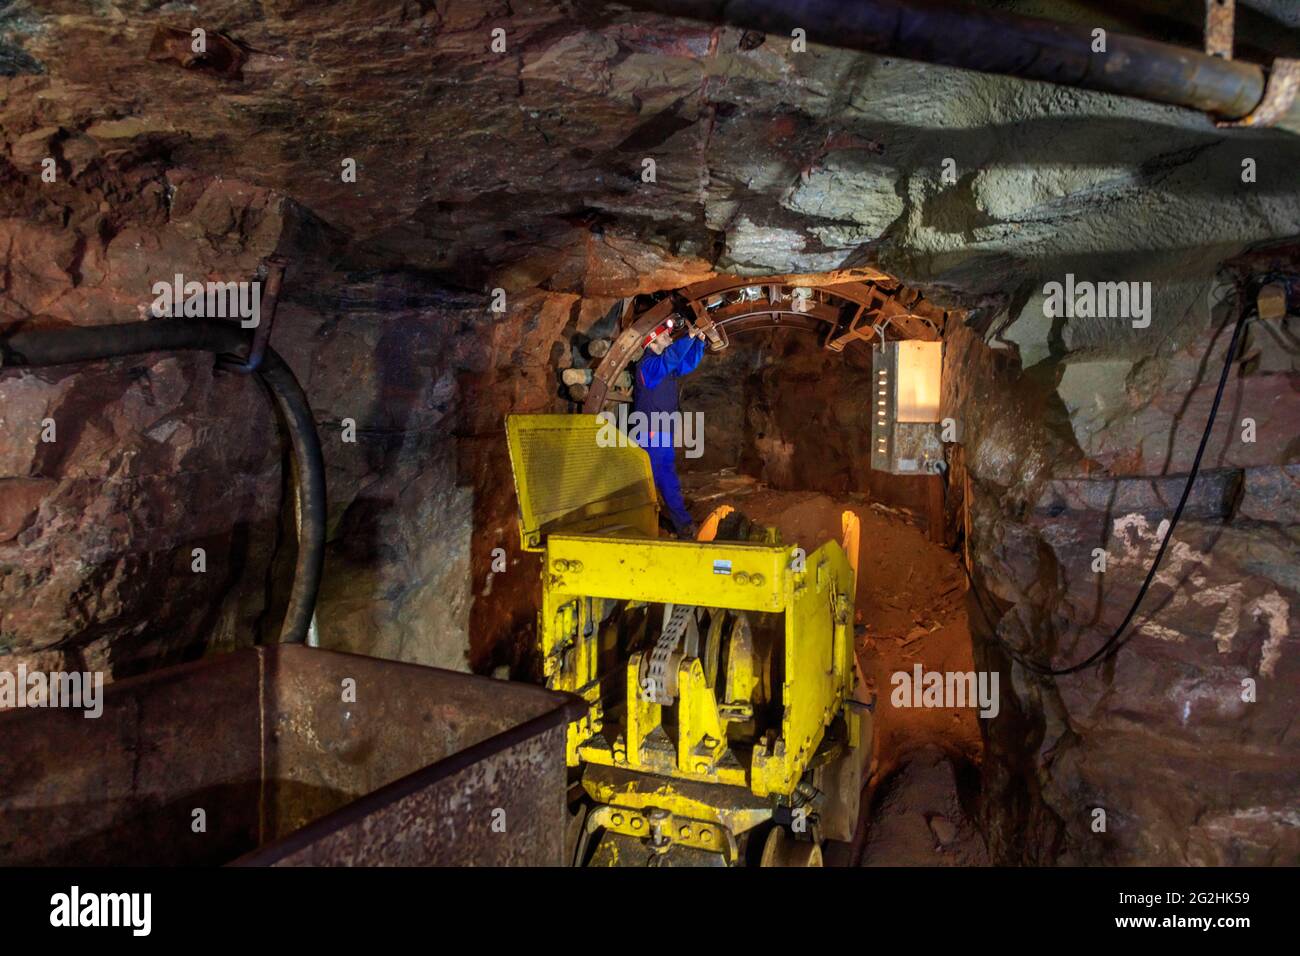 Tin mine: Pöhla visitor mine with mining technology Stock Photo